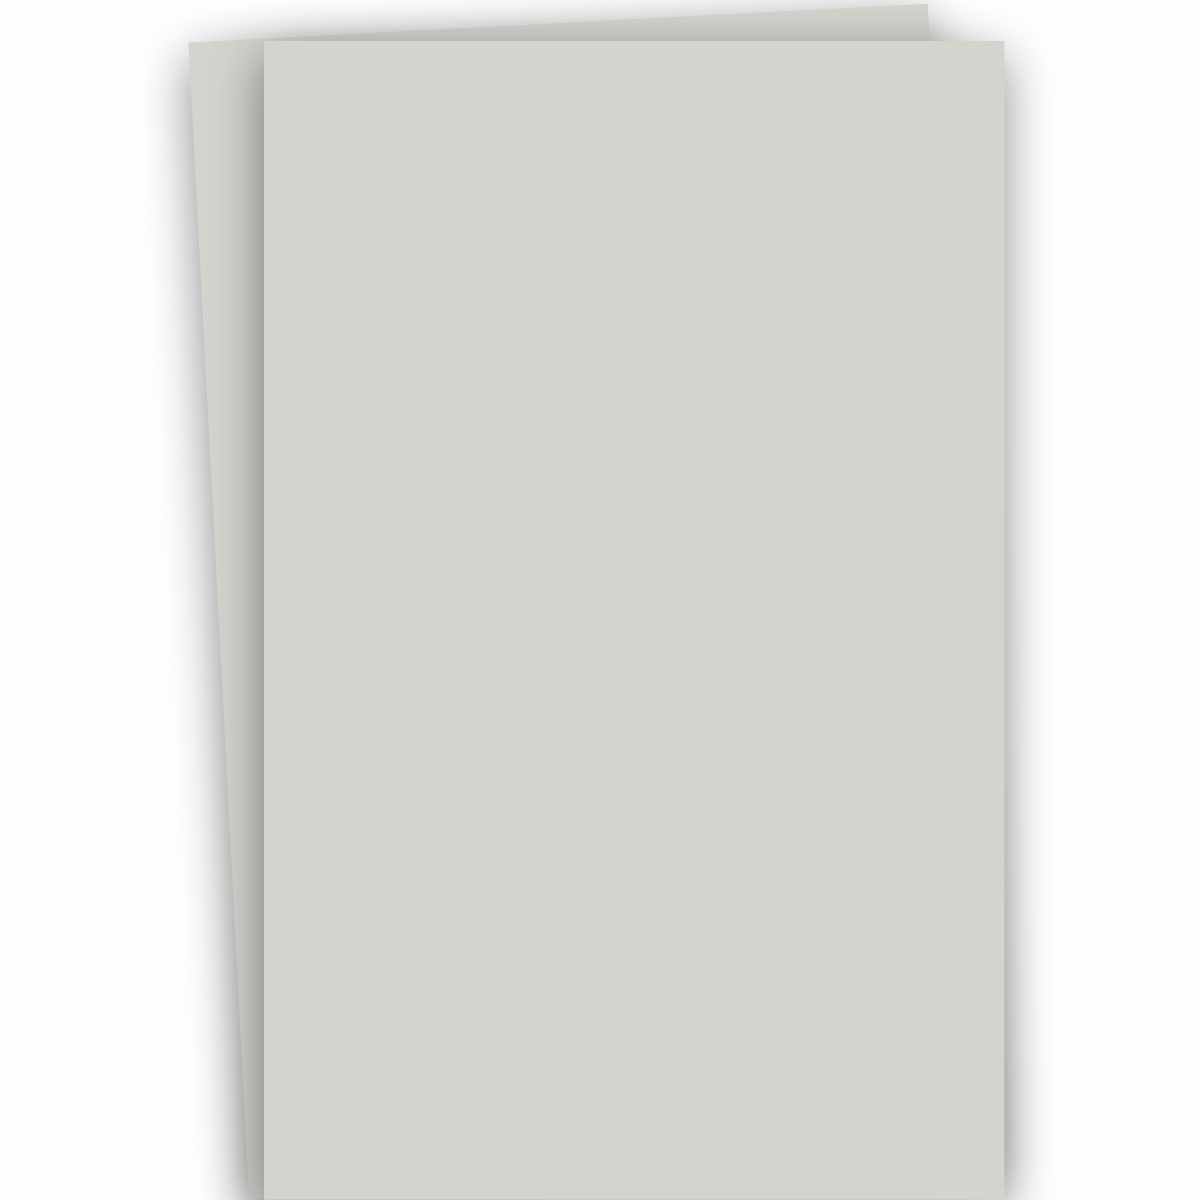 Burano Bright Yellow (51) - 12X12 Cardstock Paper - 92Lb Cover (250Gsm) -  50 Pk